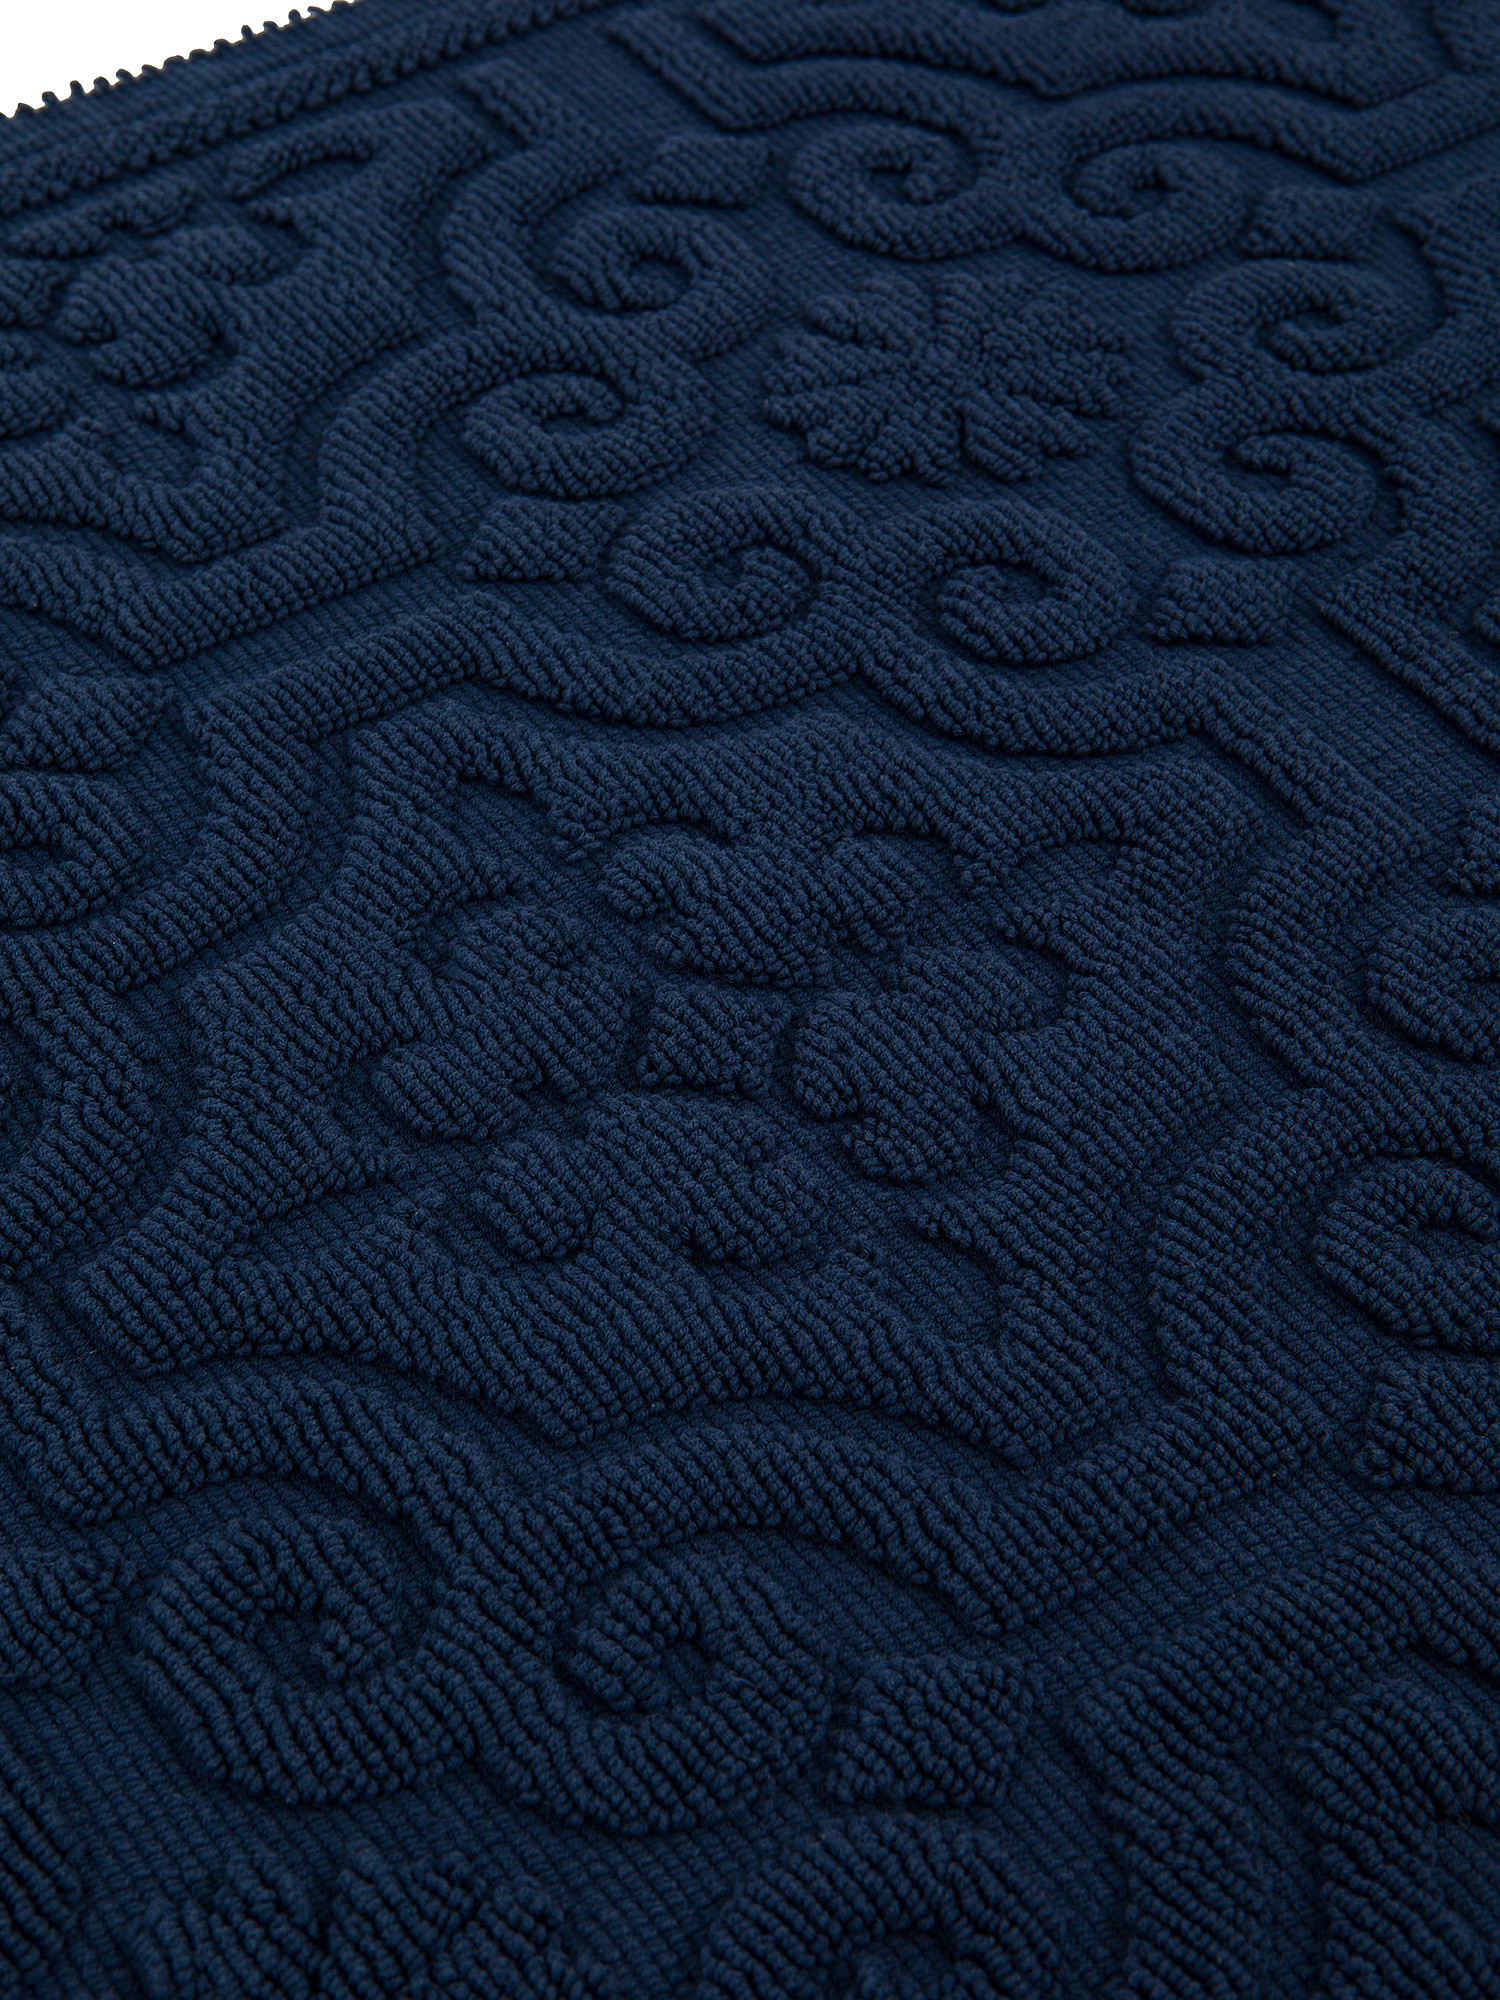 Zefiro solid color cotton shower mat, Dark Blue, large image number 1